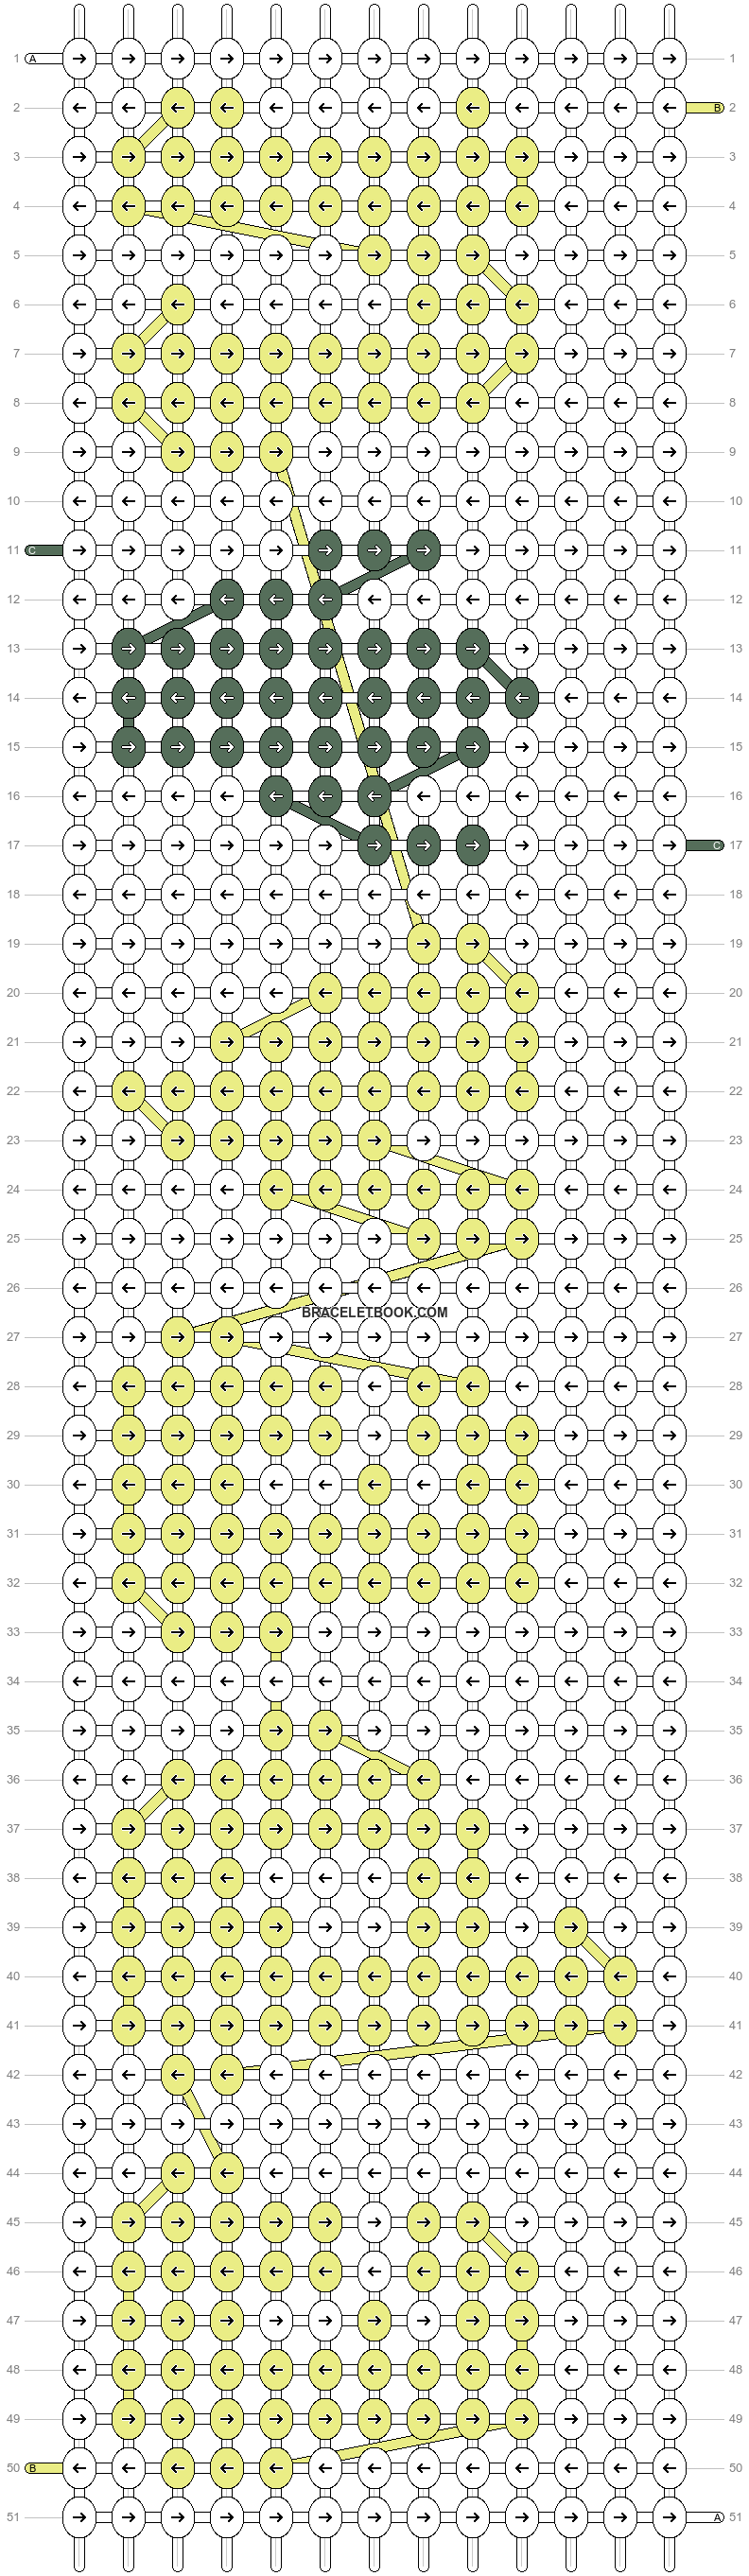 Alpha pattern #54512 variation #92828 pattern